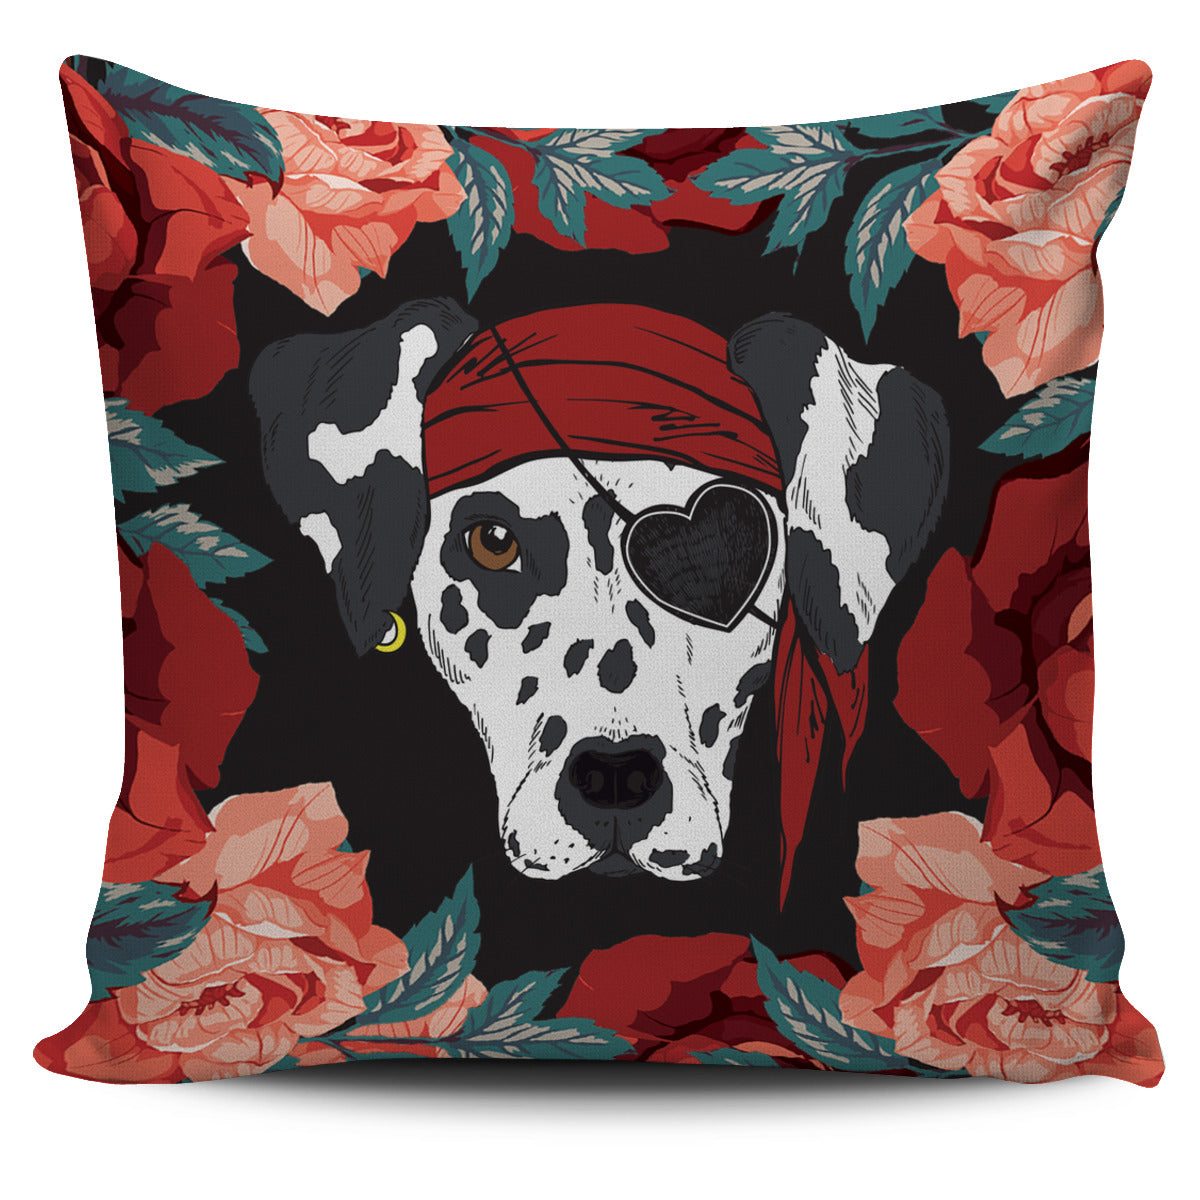 Dalmatian Pirate Pillow Cover